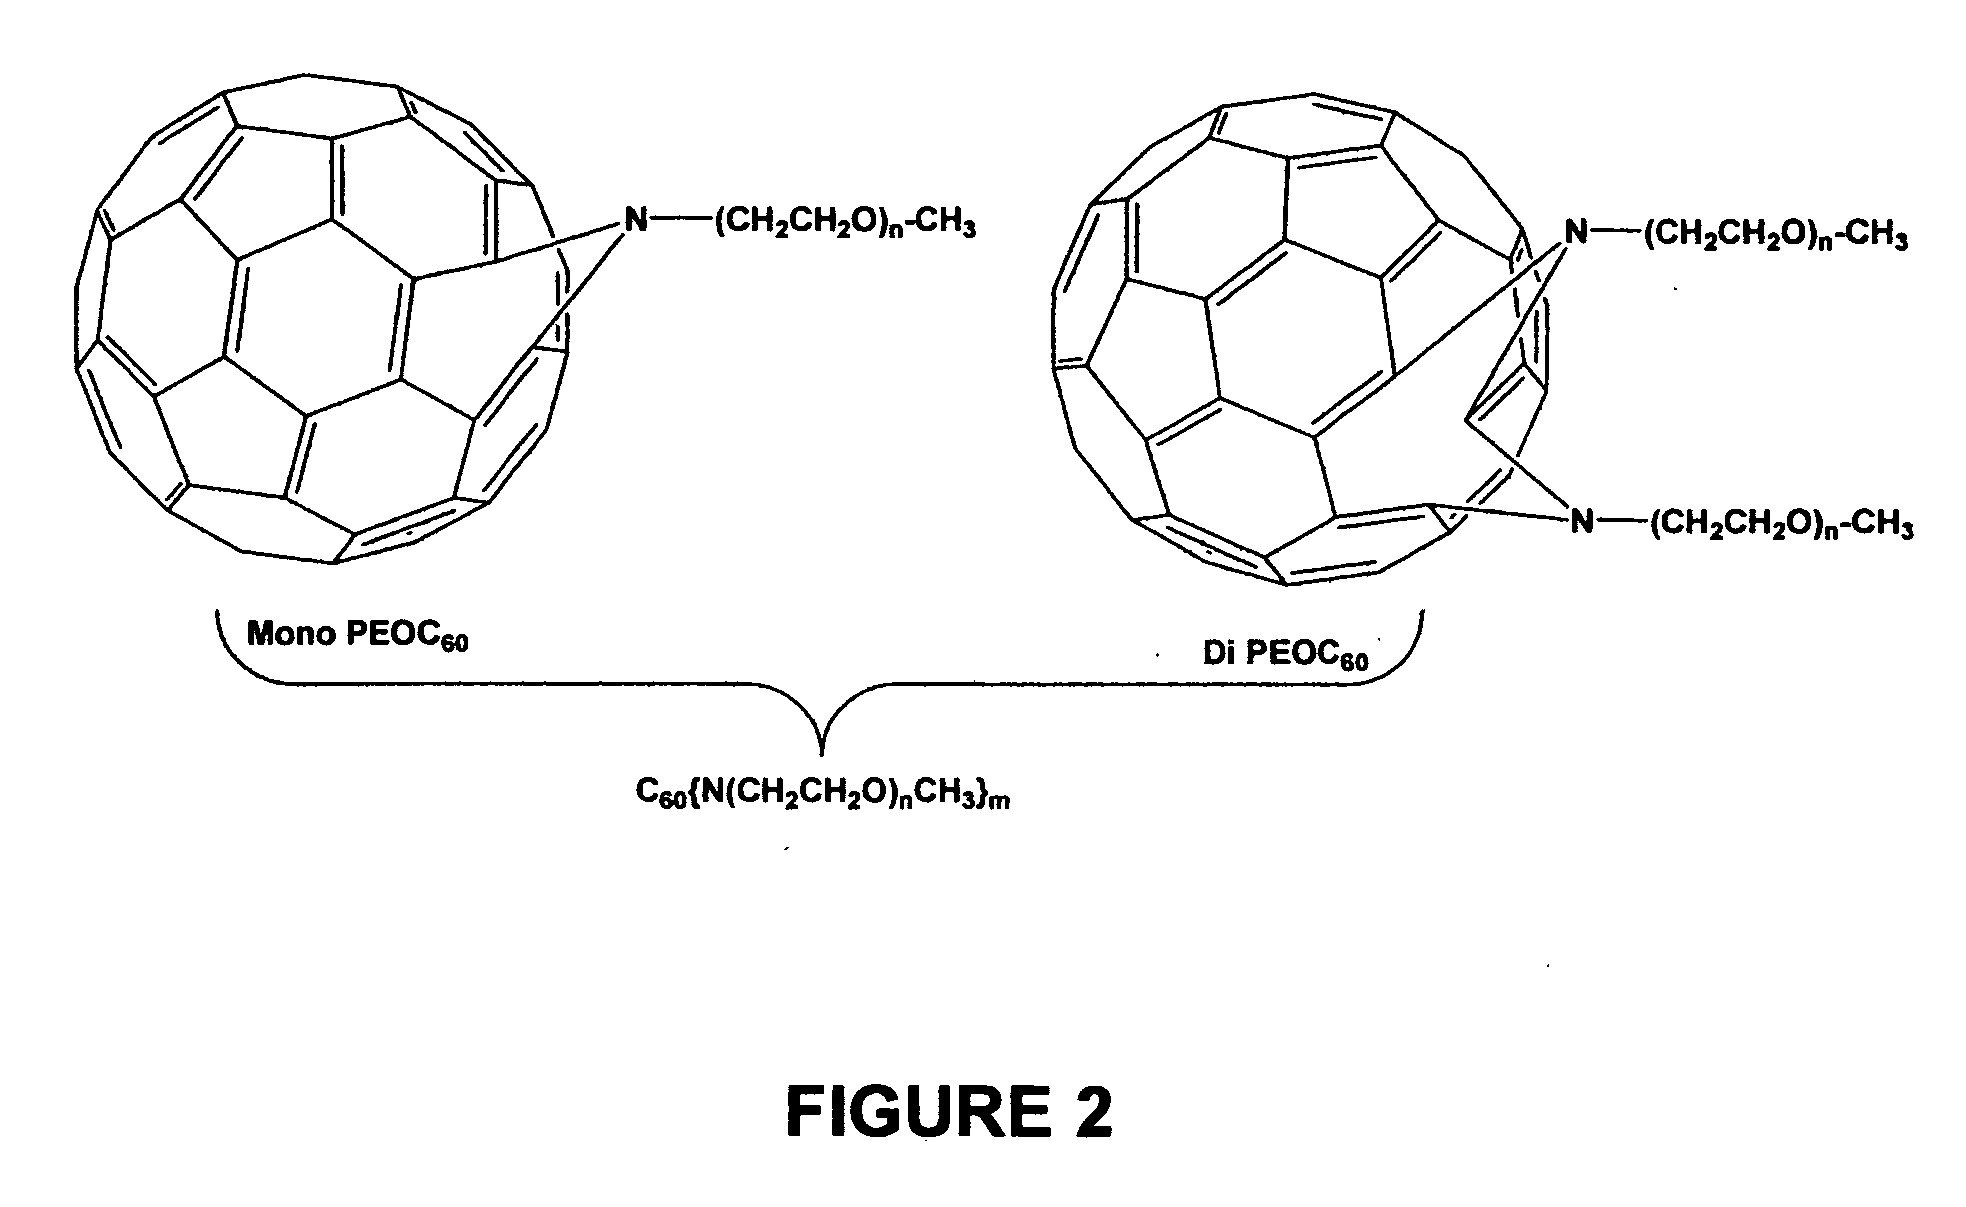 Hydro cyano and cyano fullerene derivatives